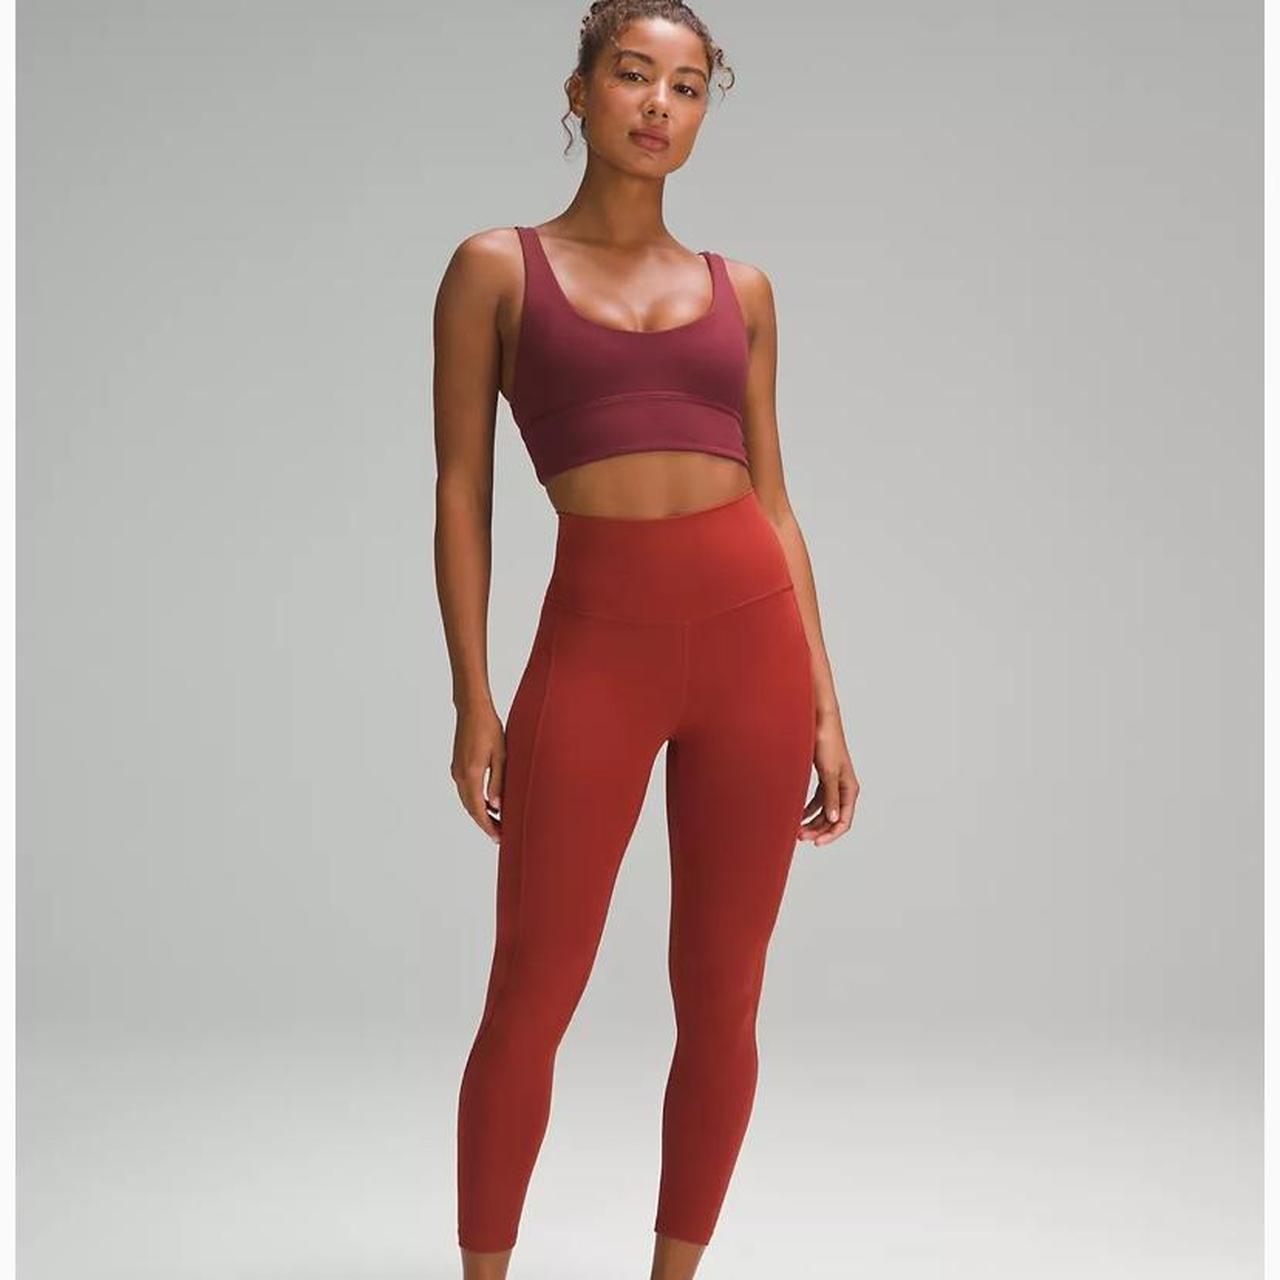 lululemon leggings size 4 - Athletic apparel